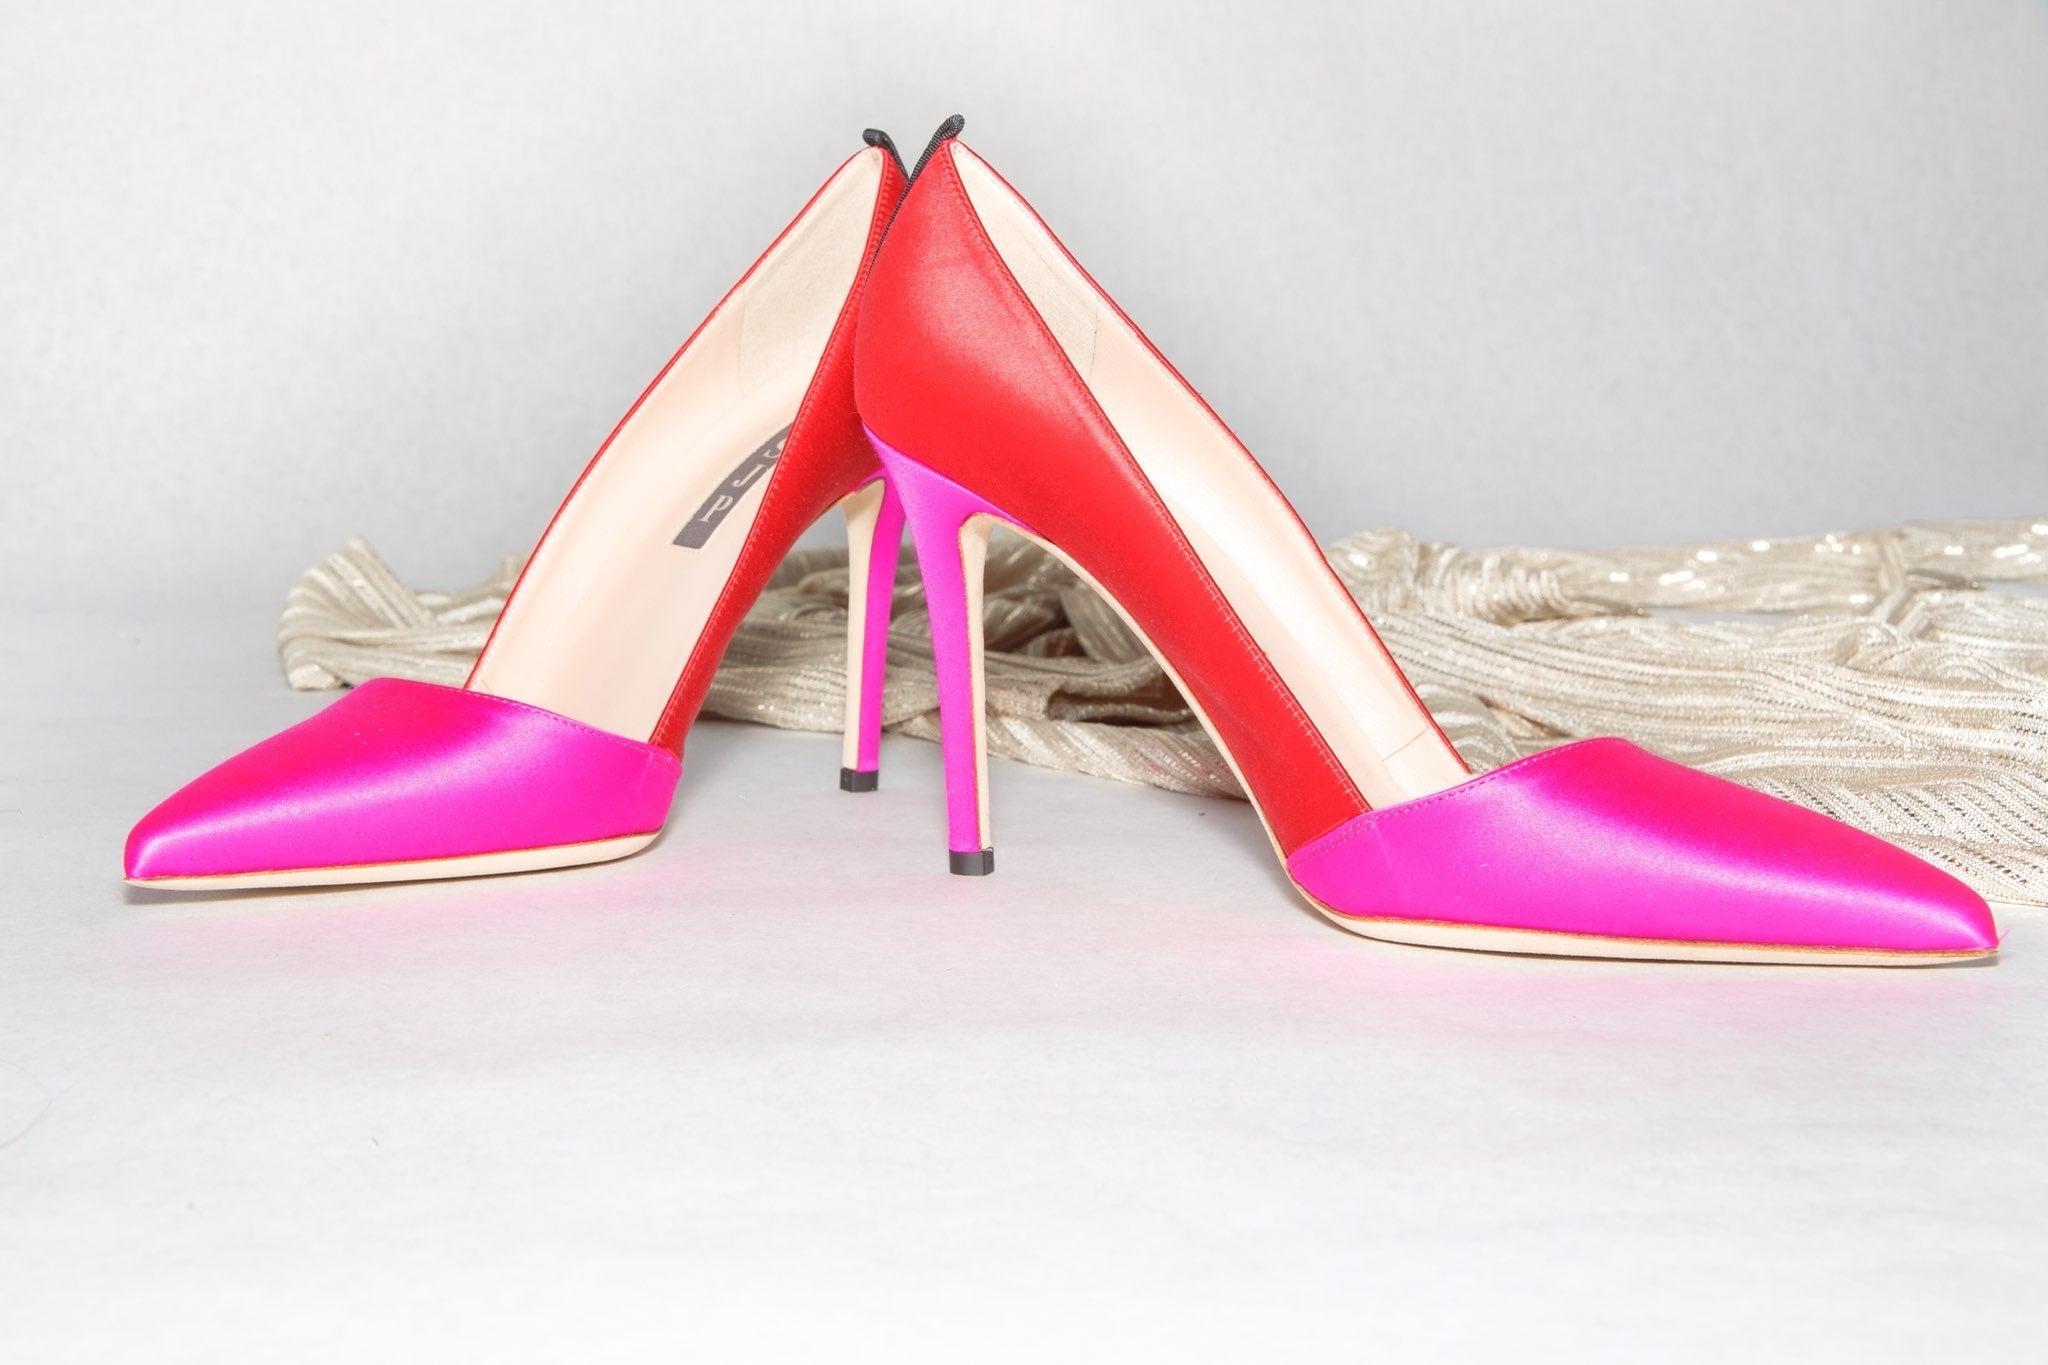 Women's Designer Footwear - Shoes, Boots, Sandals, High Heels Online ...